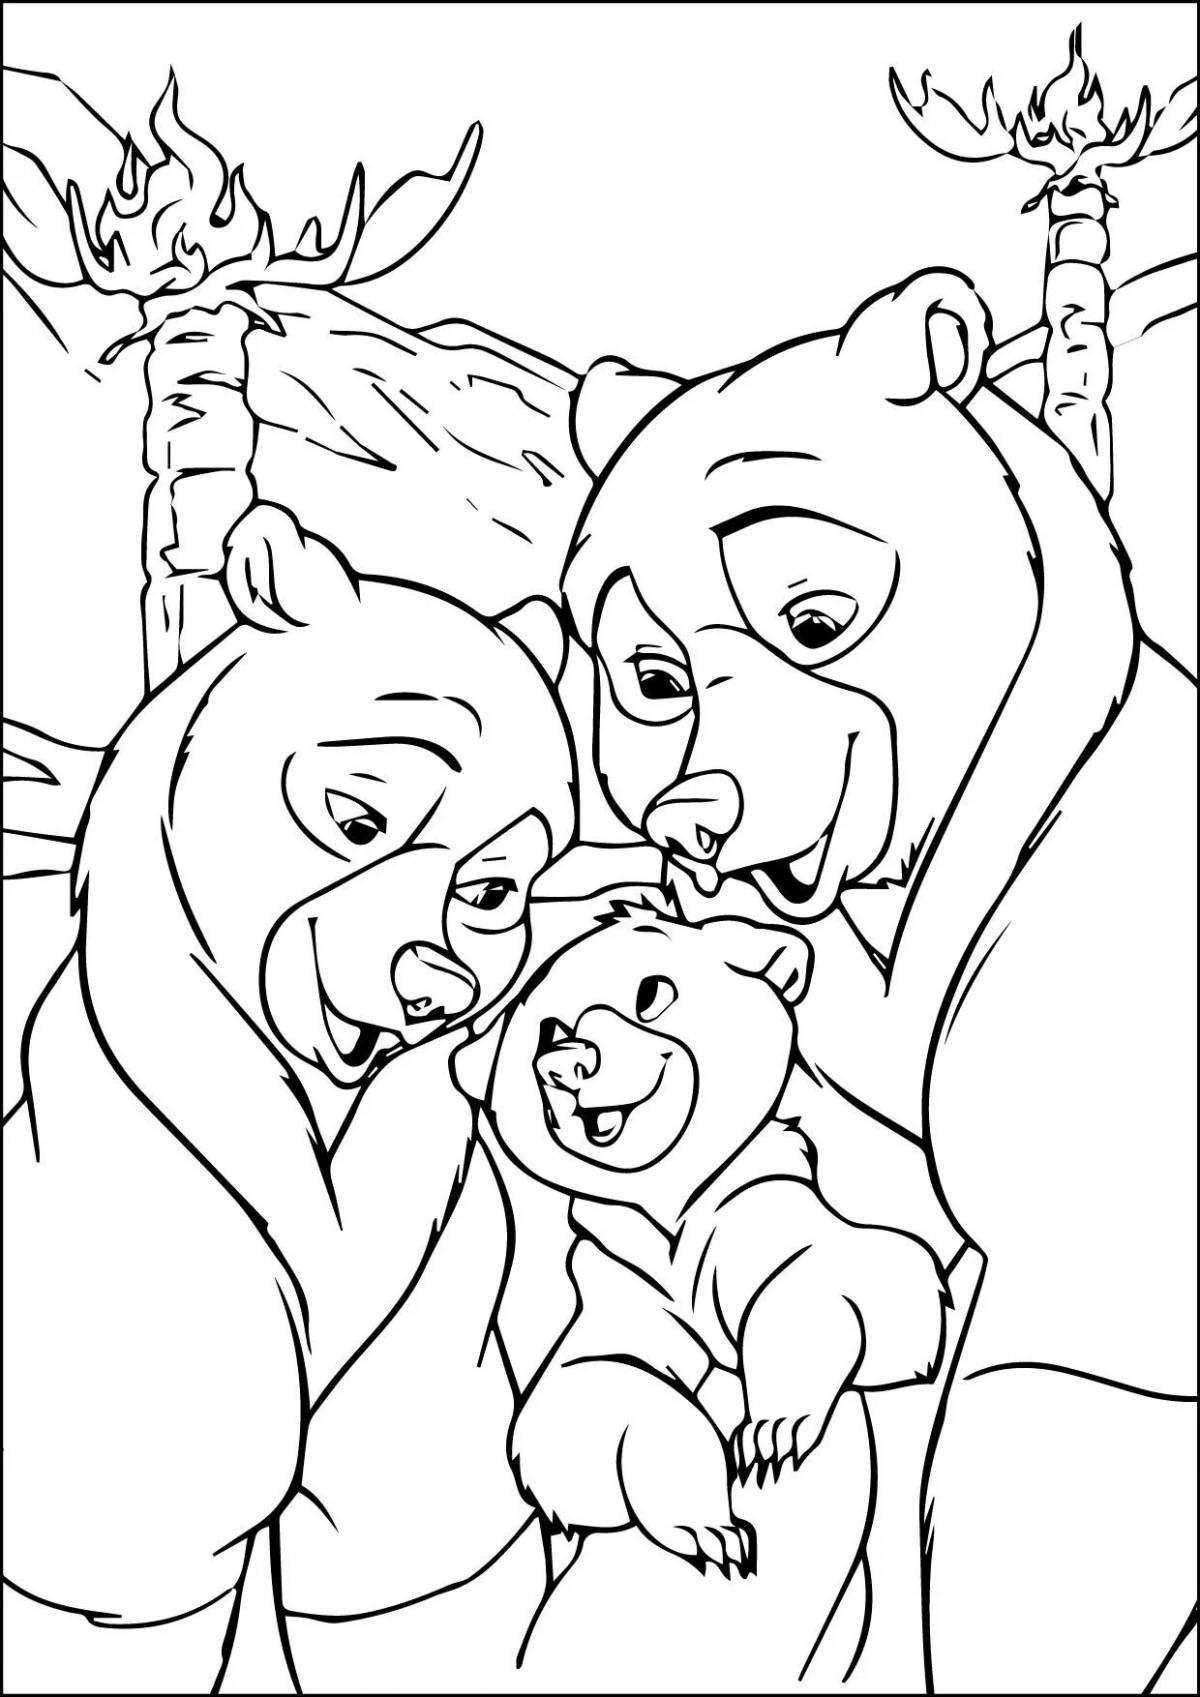 Coloring book magical bear family